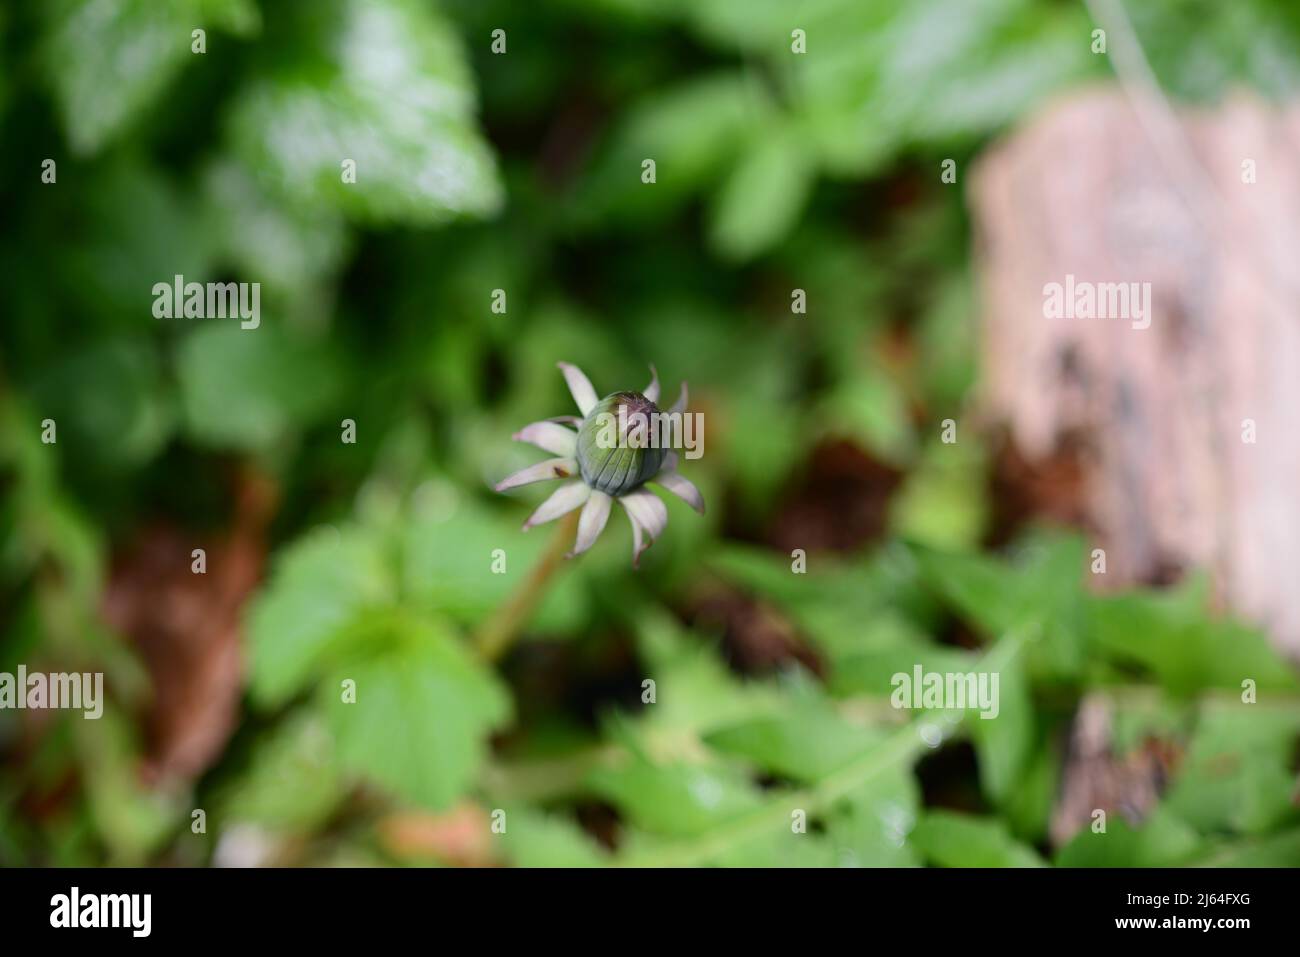 A dandelion bud against green blurred leaves Stock Photo